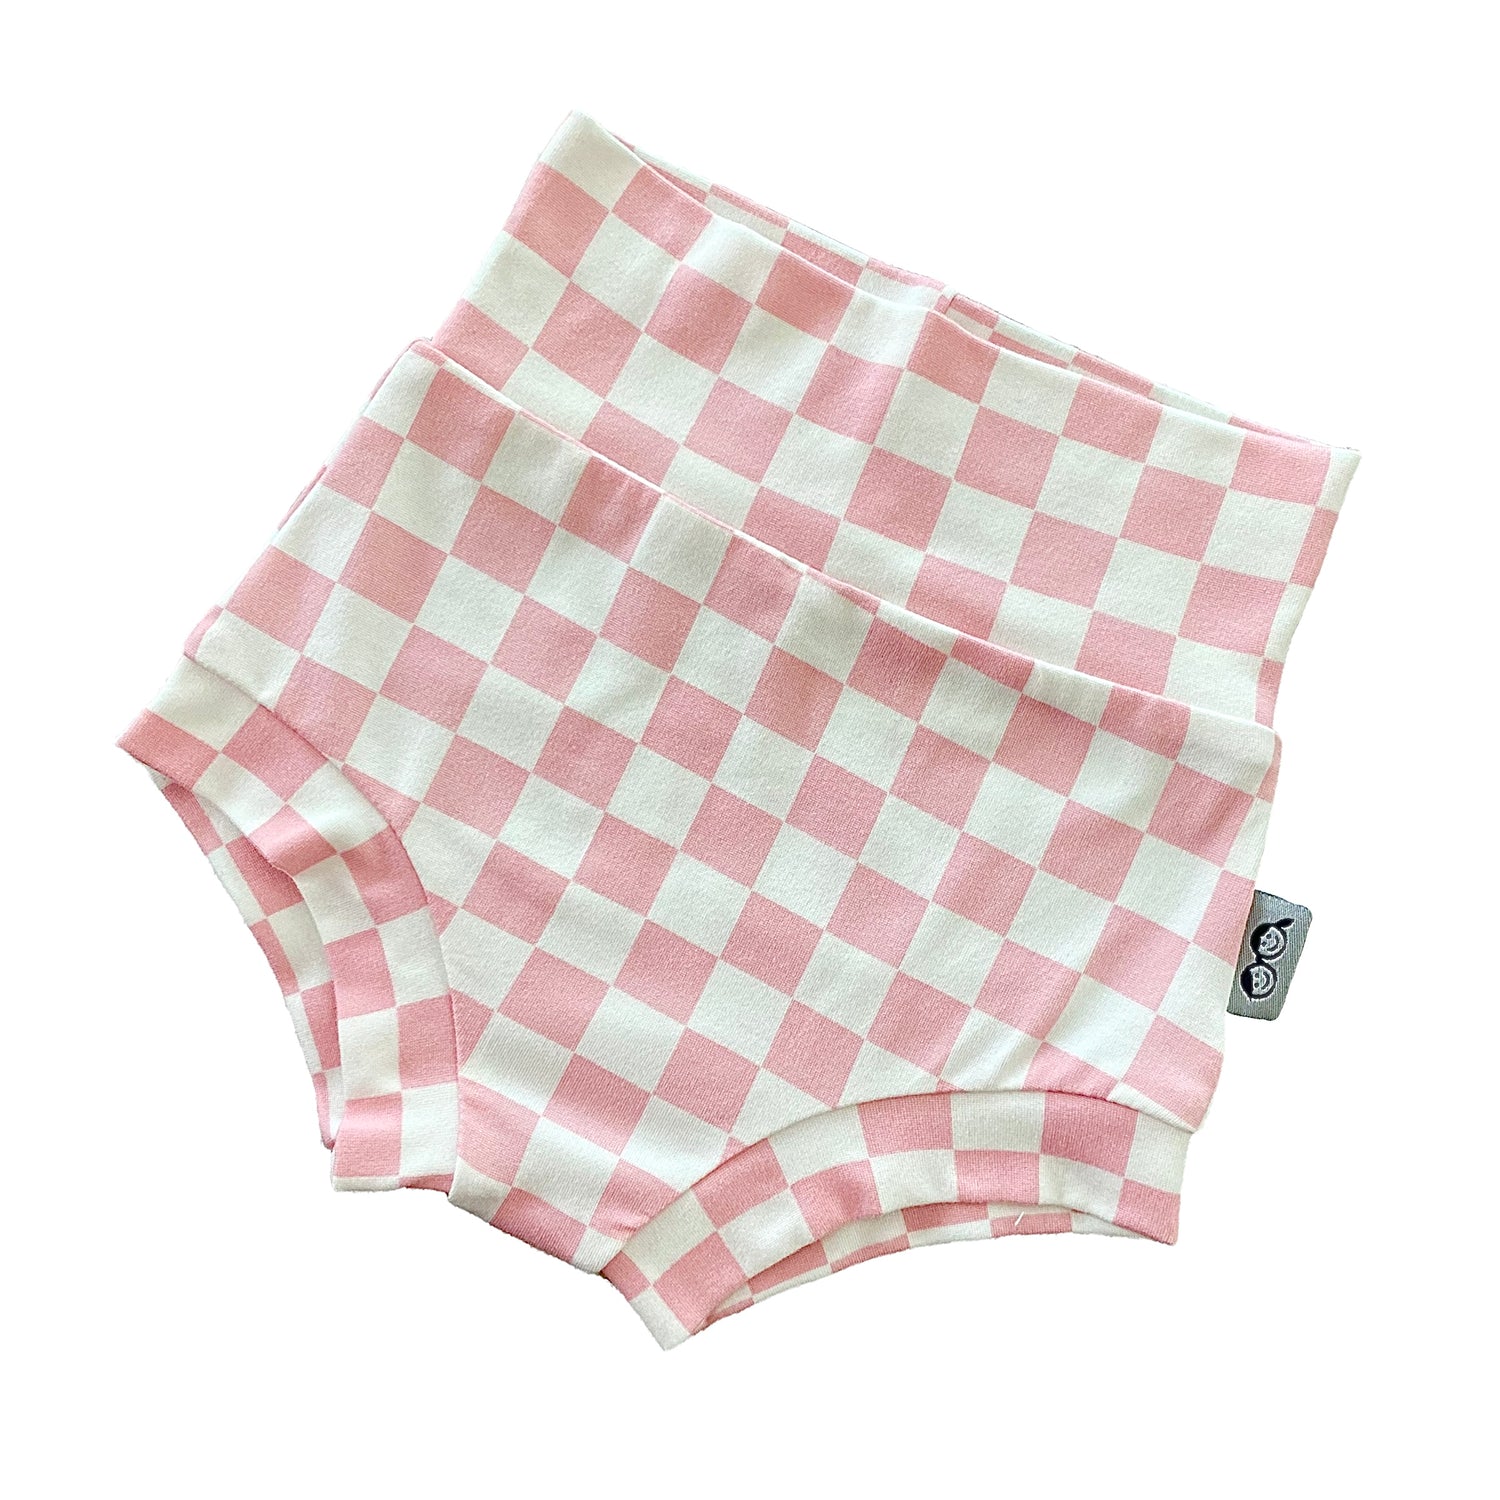 Pink Retro Checkered Bummies 